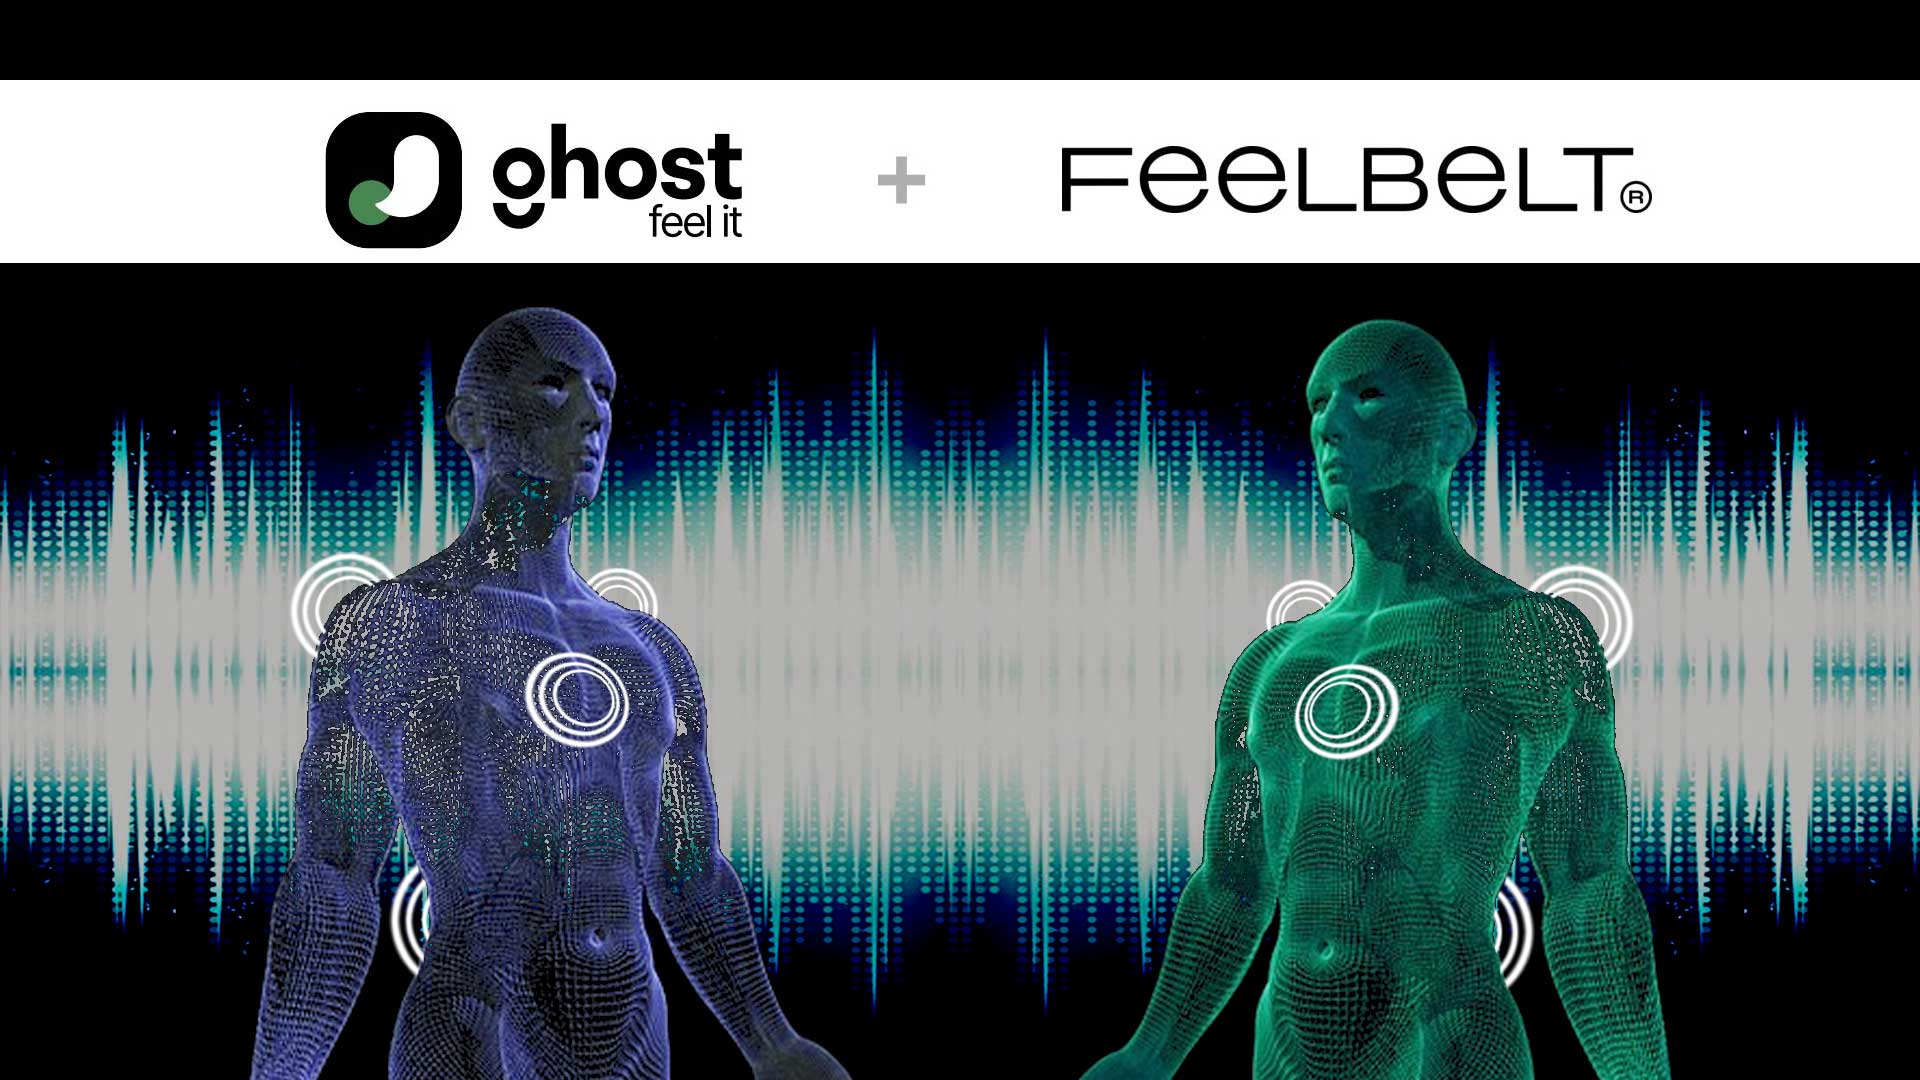 feelbelt ghost hapticsuit